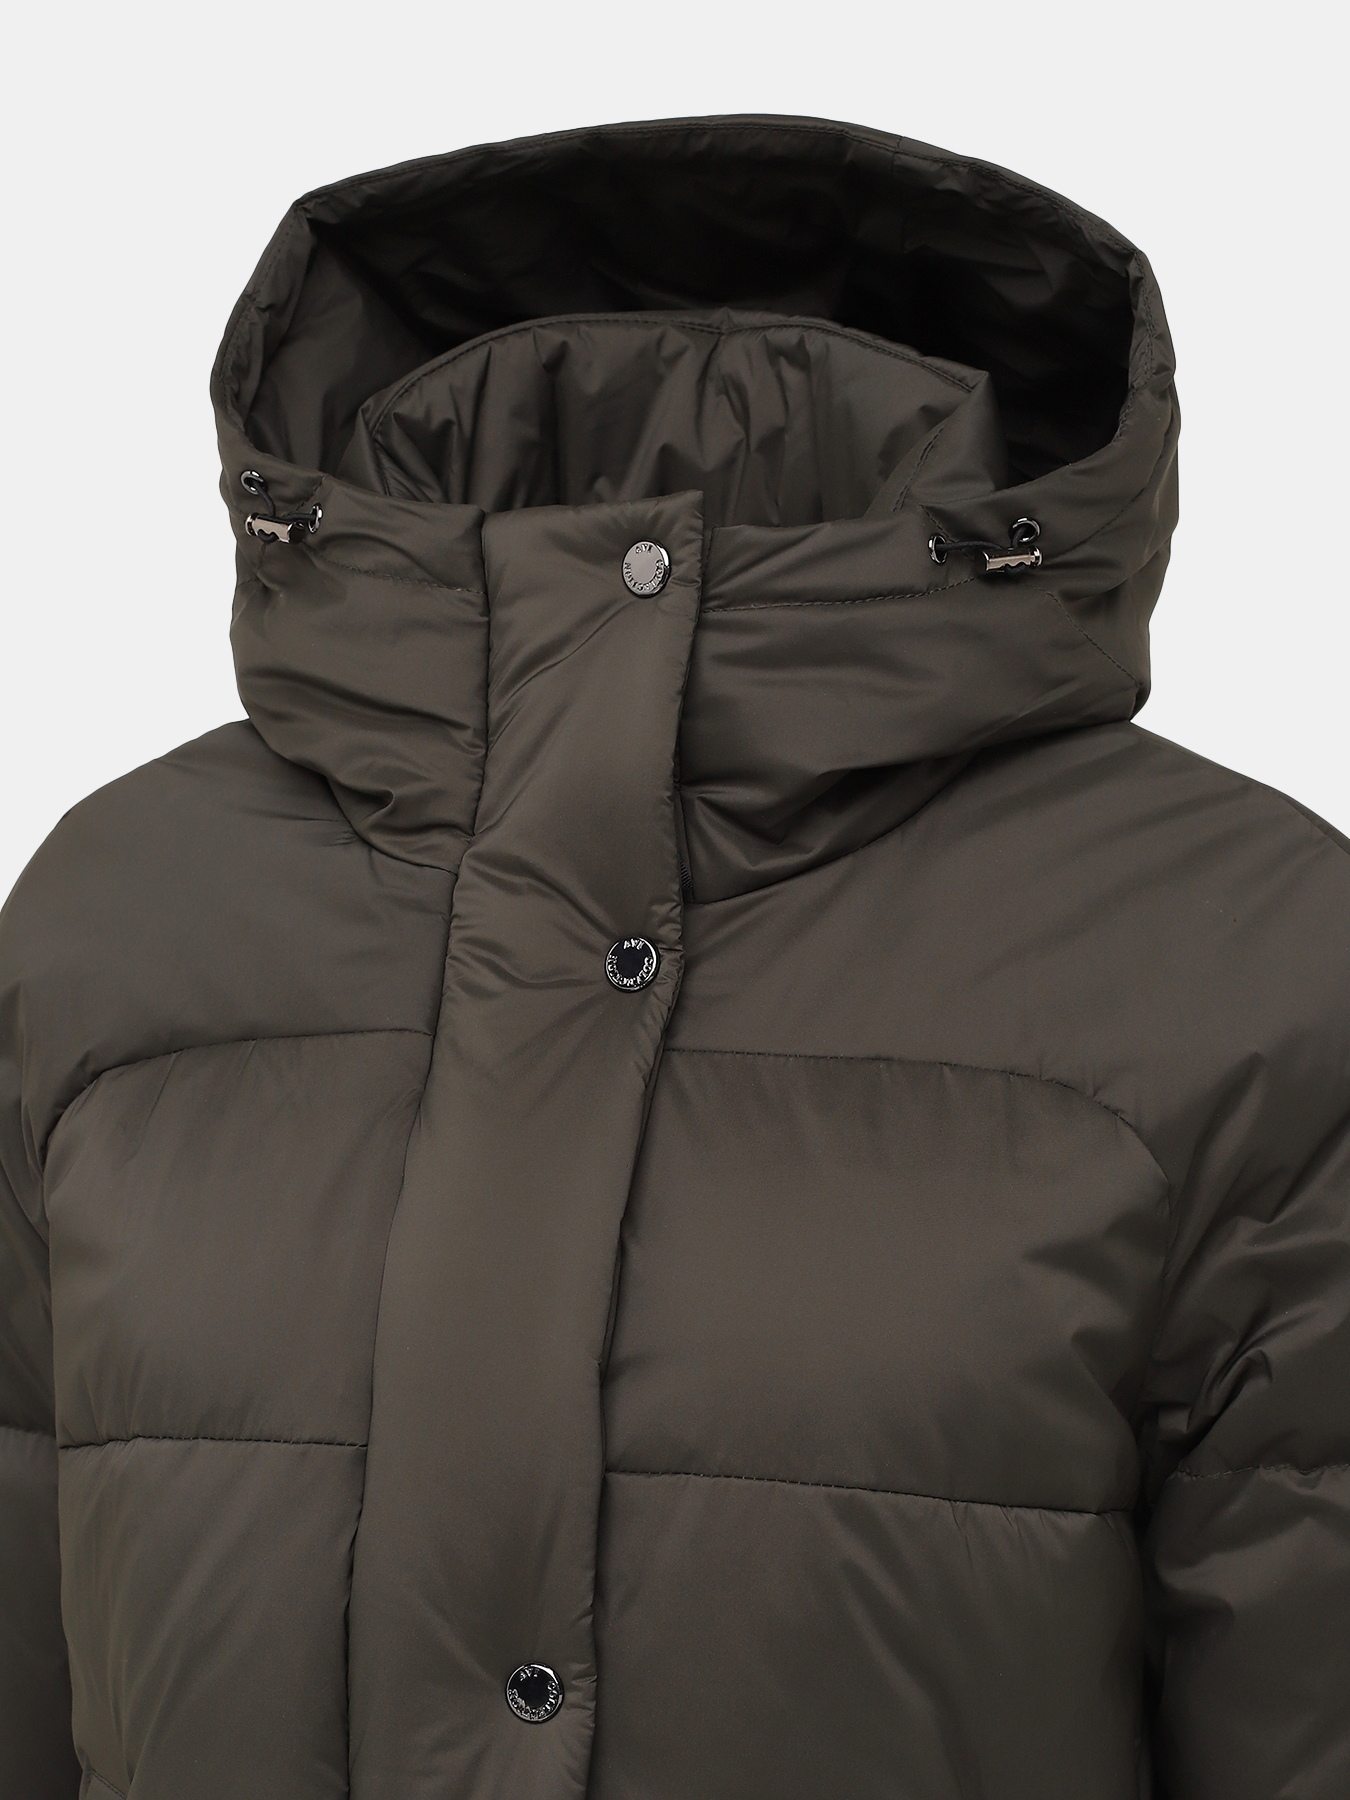 Пальто зимнее AVI 433638-026, цвет хаки, размер 50 - фото 2